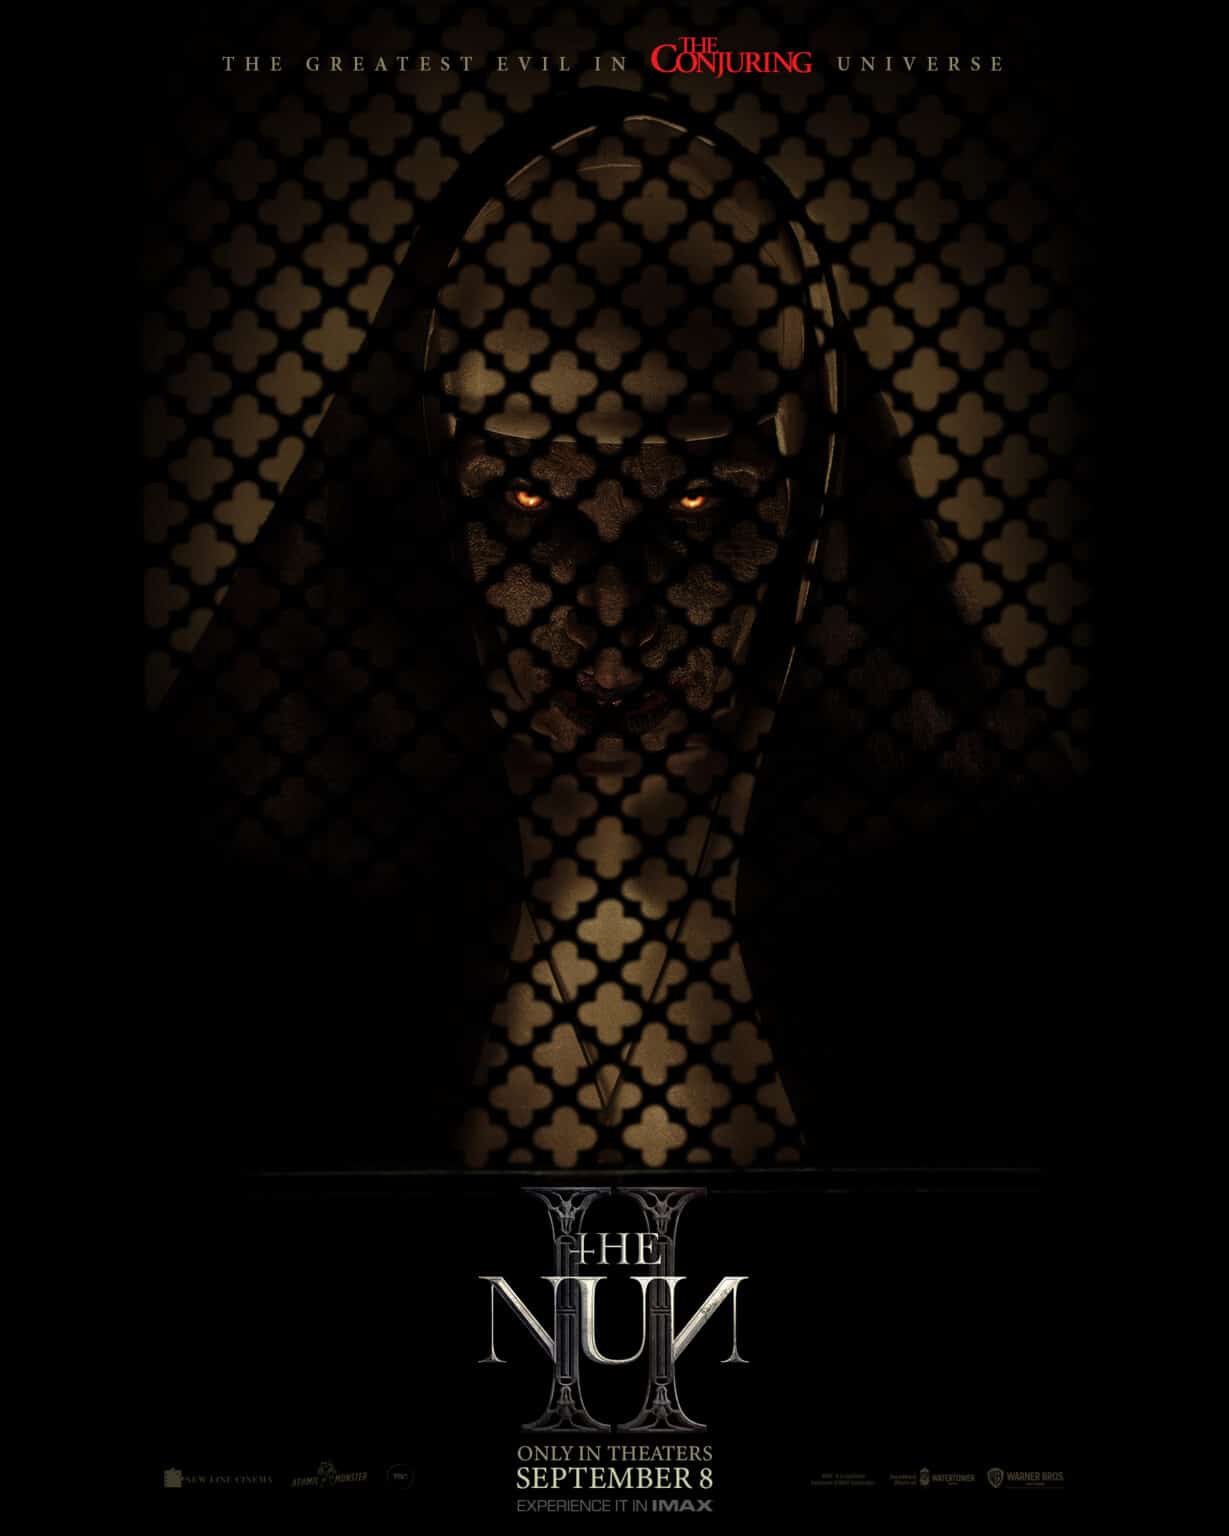 The Nun II gets a digital release tomorrow!